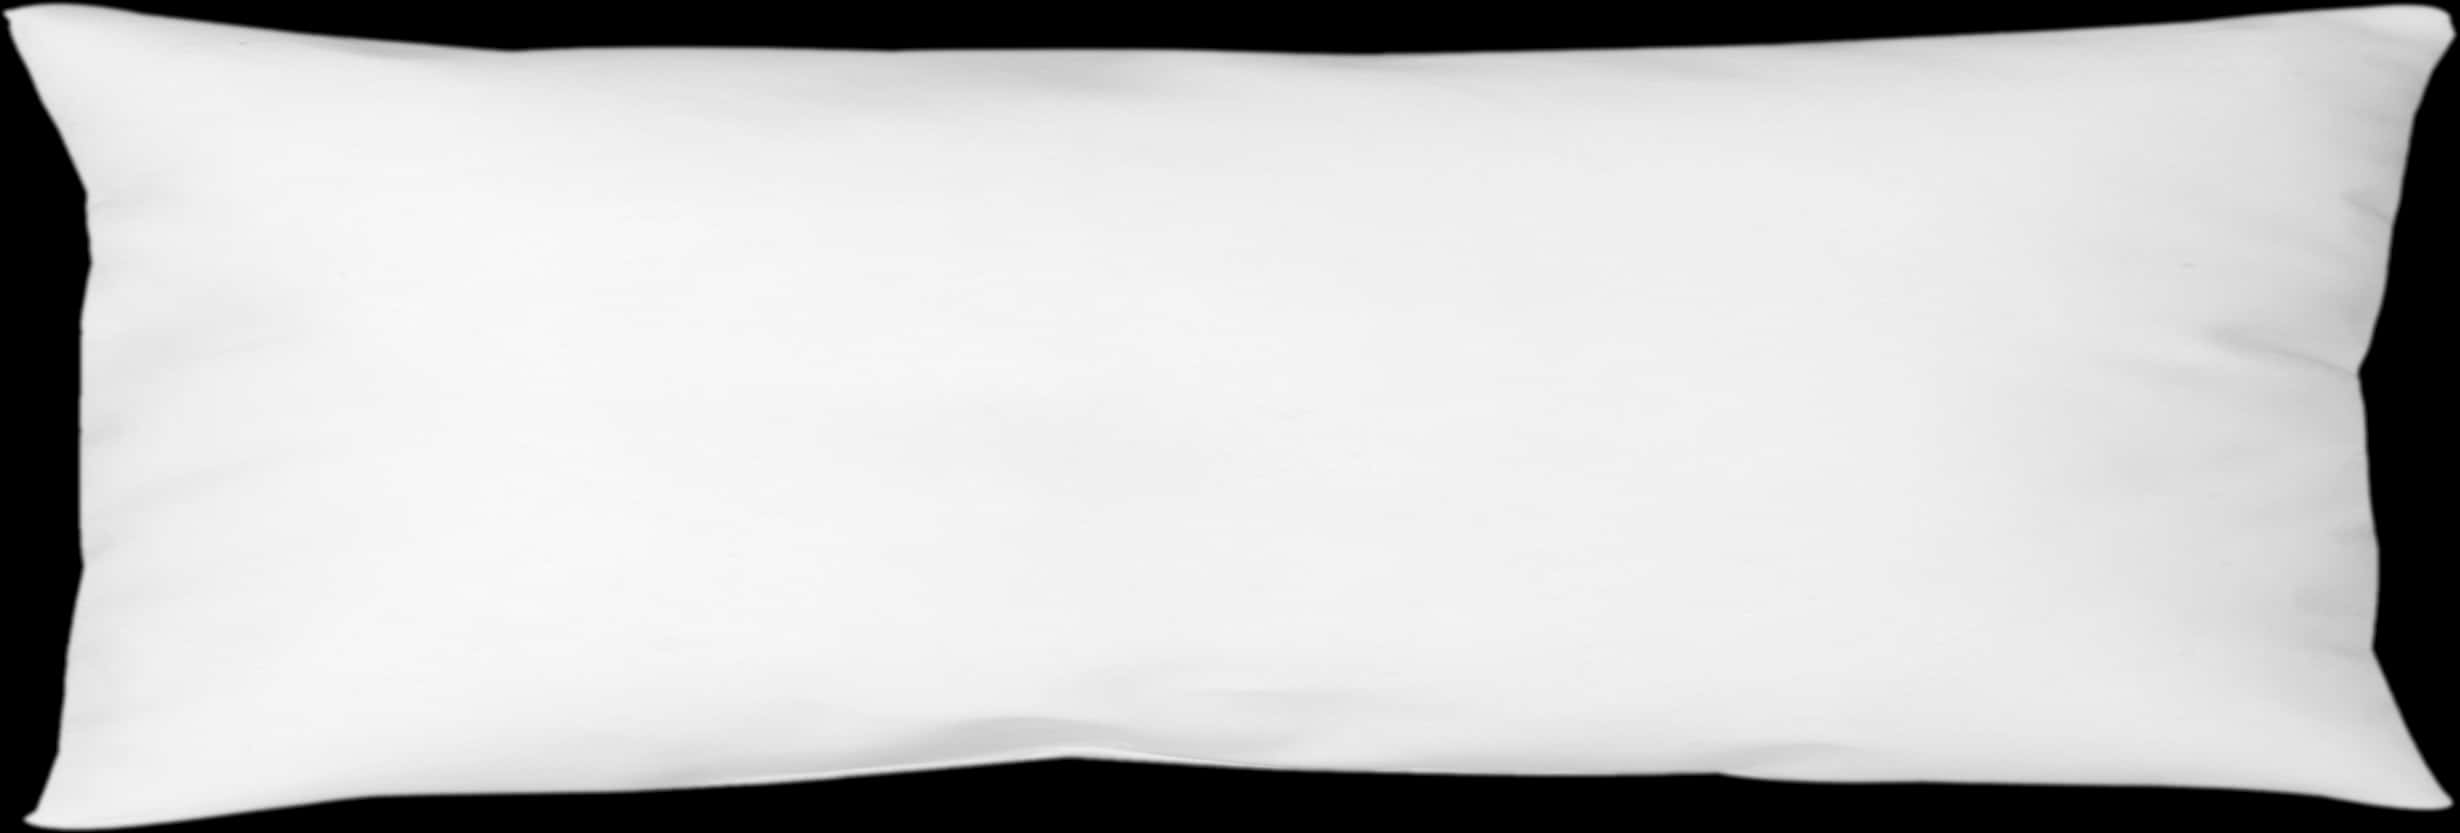 White Rectangular Pillowon Black Background.jpg PNG image